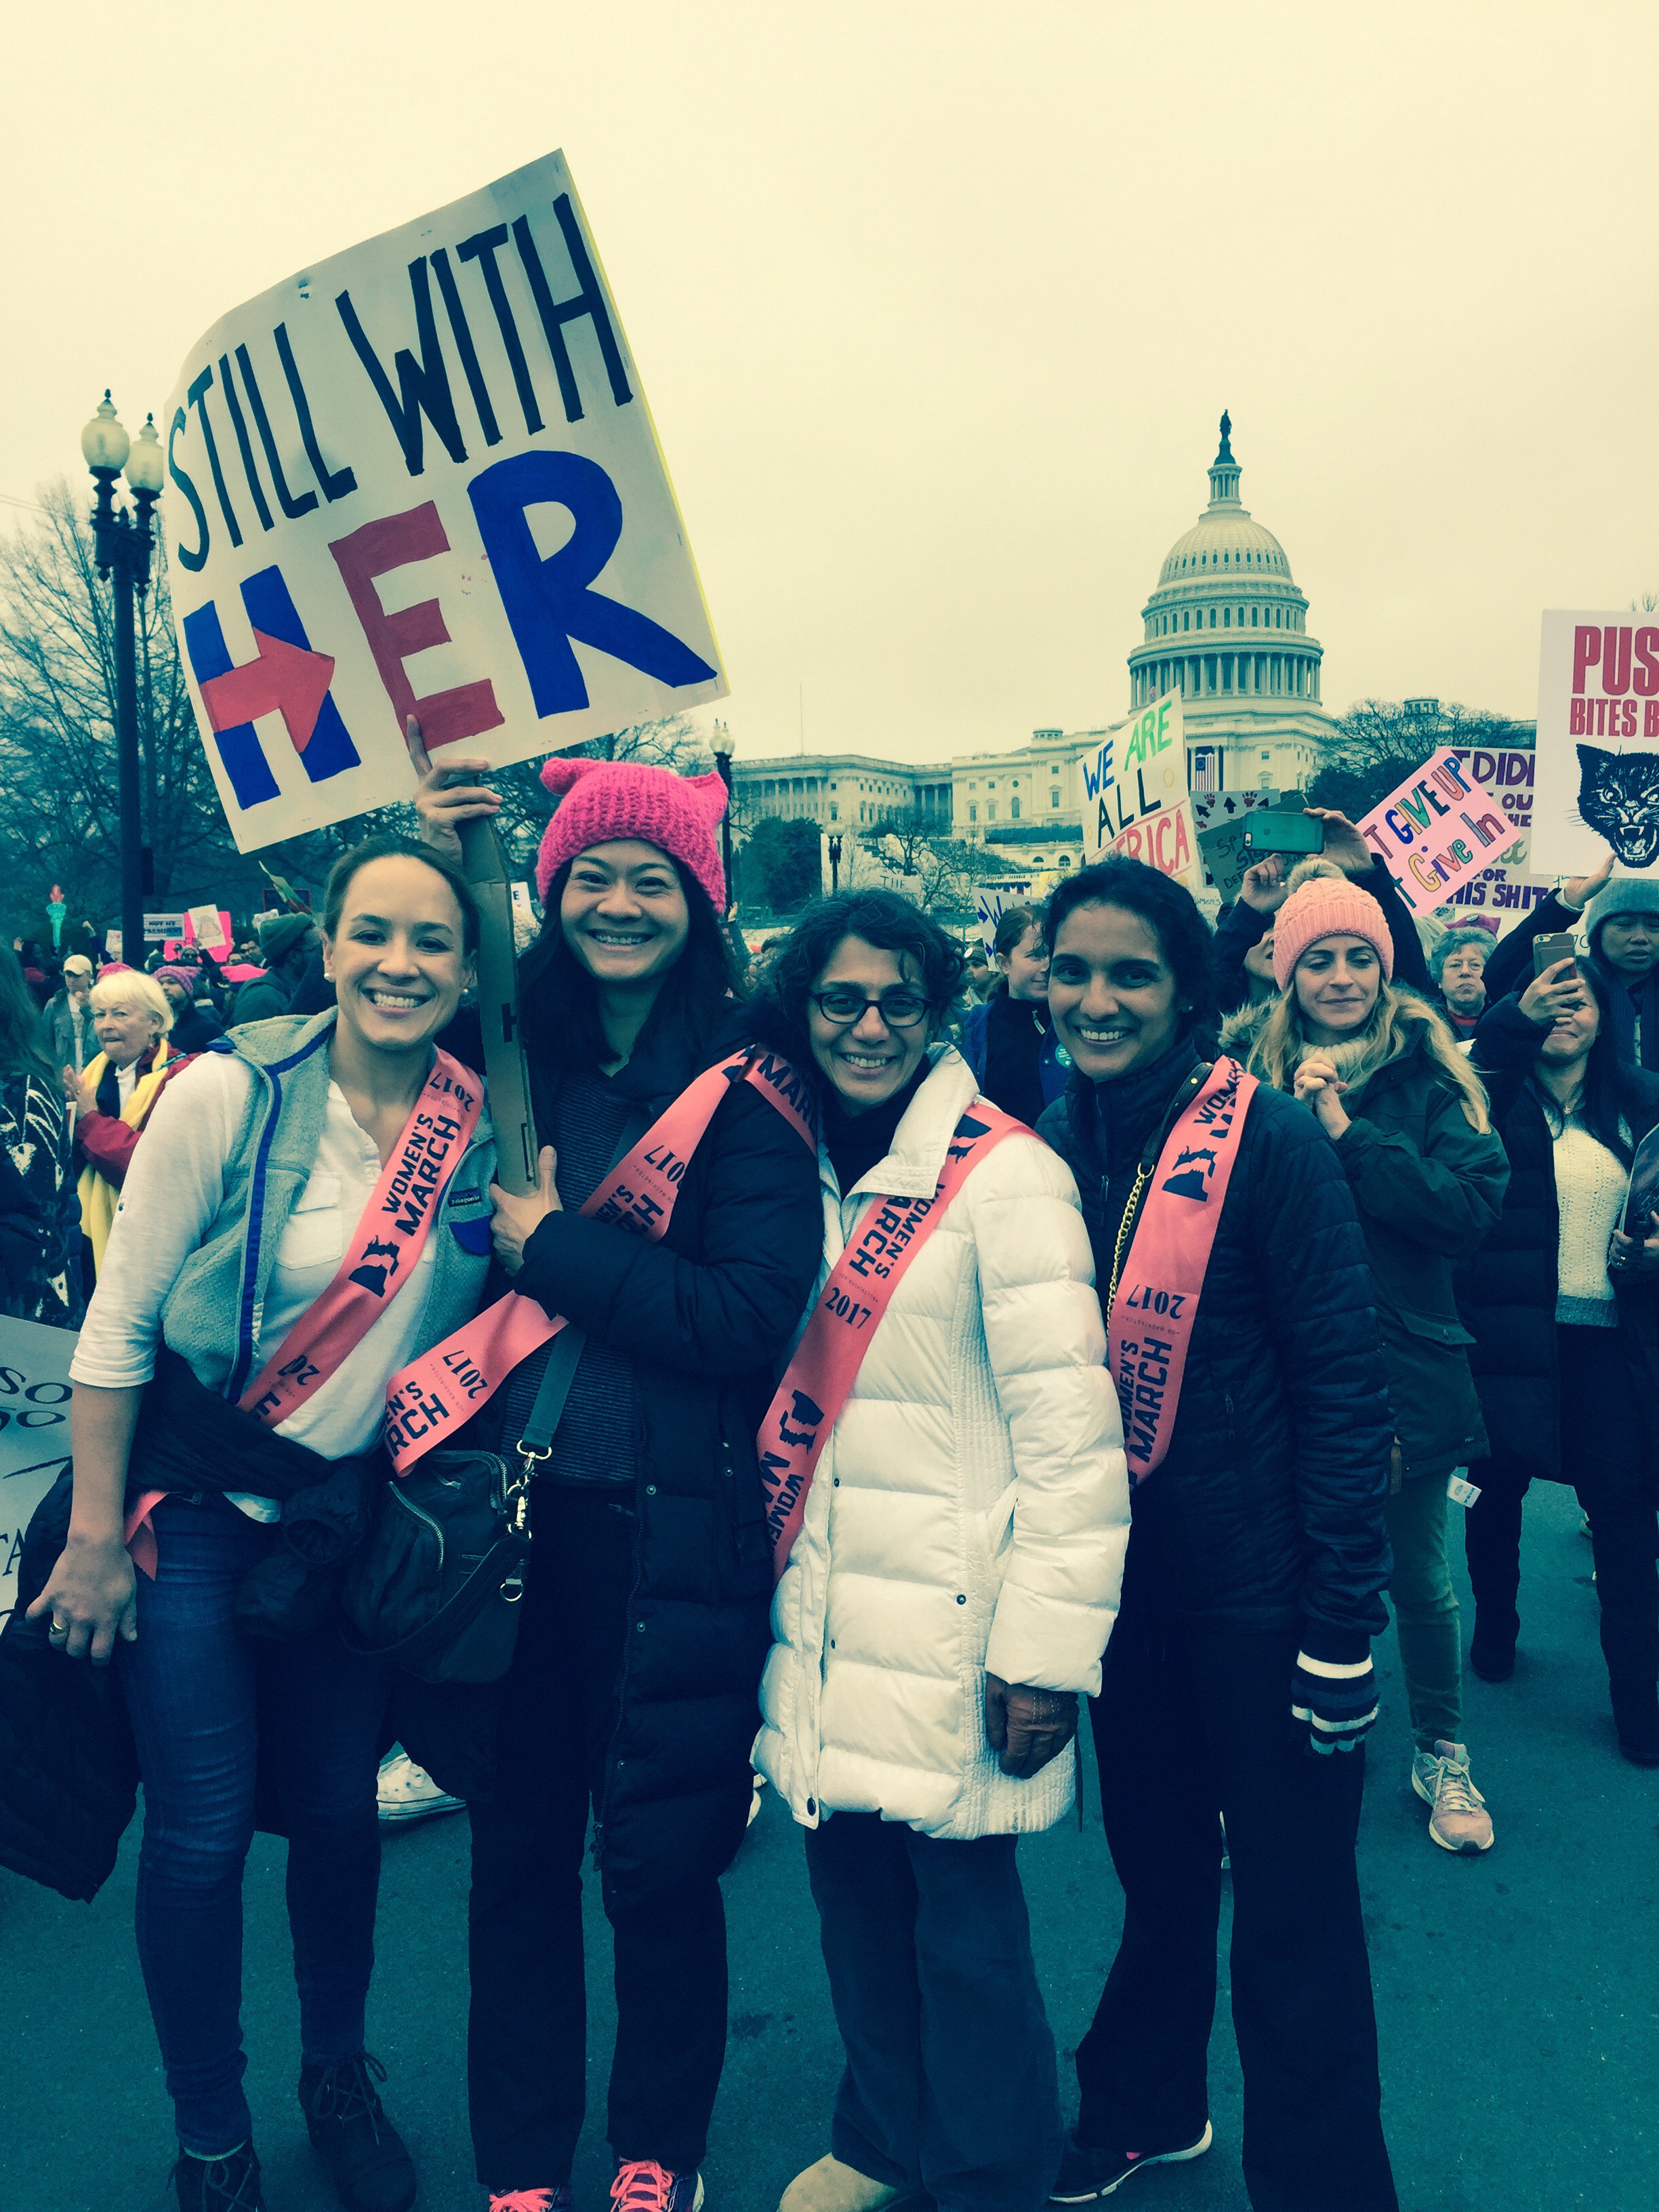 women-s-march-on-washington-2017-sassy-sashes-on-women-in-camaraderie.-stronger-together..jpg